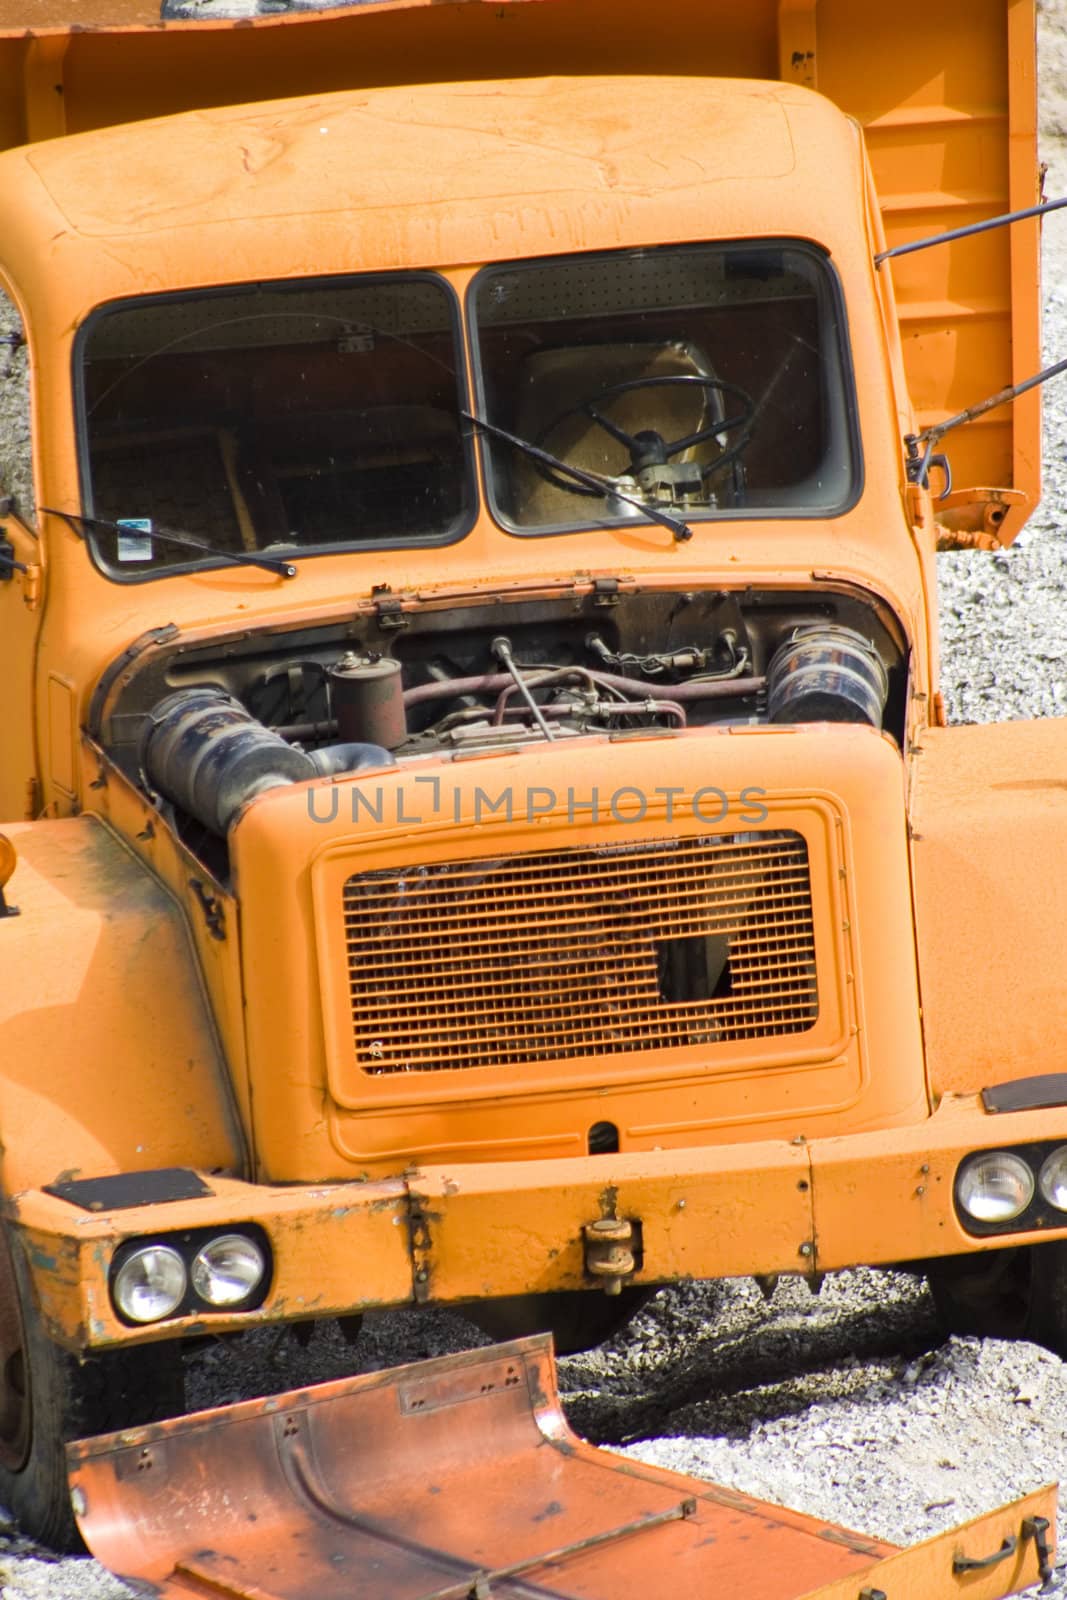 Old, abandoned, broken down orange truck in quarry.